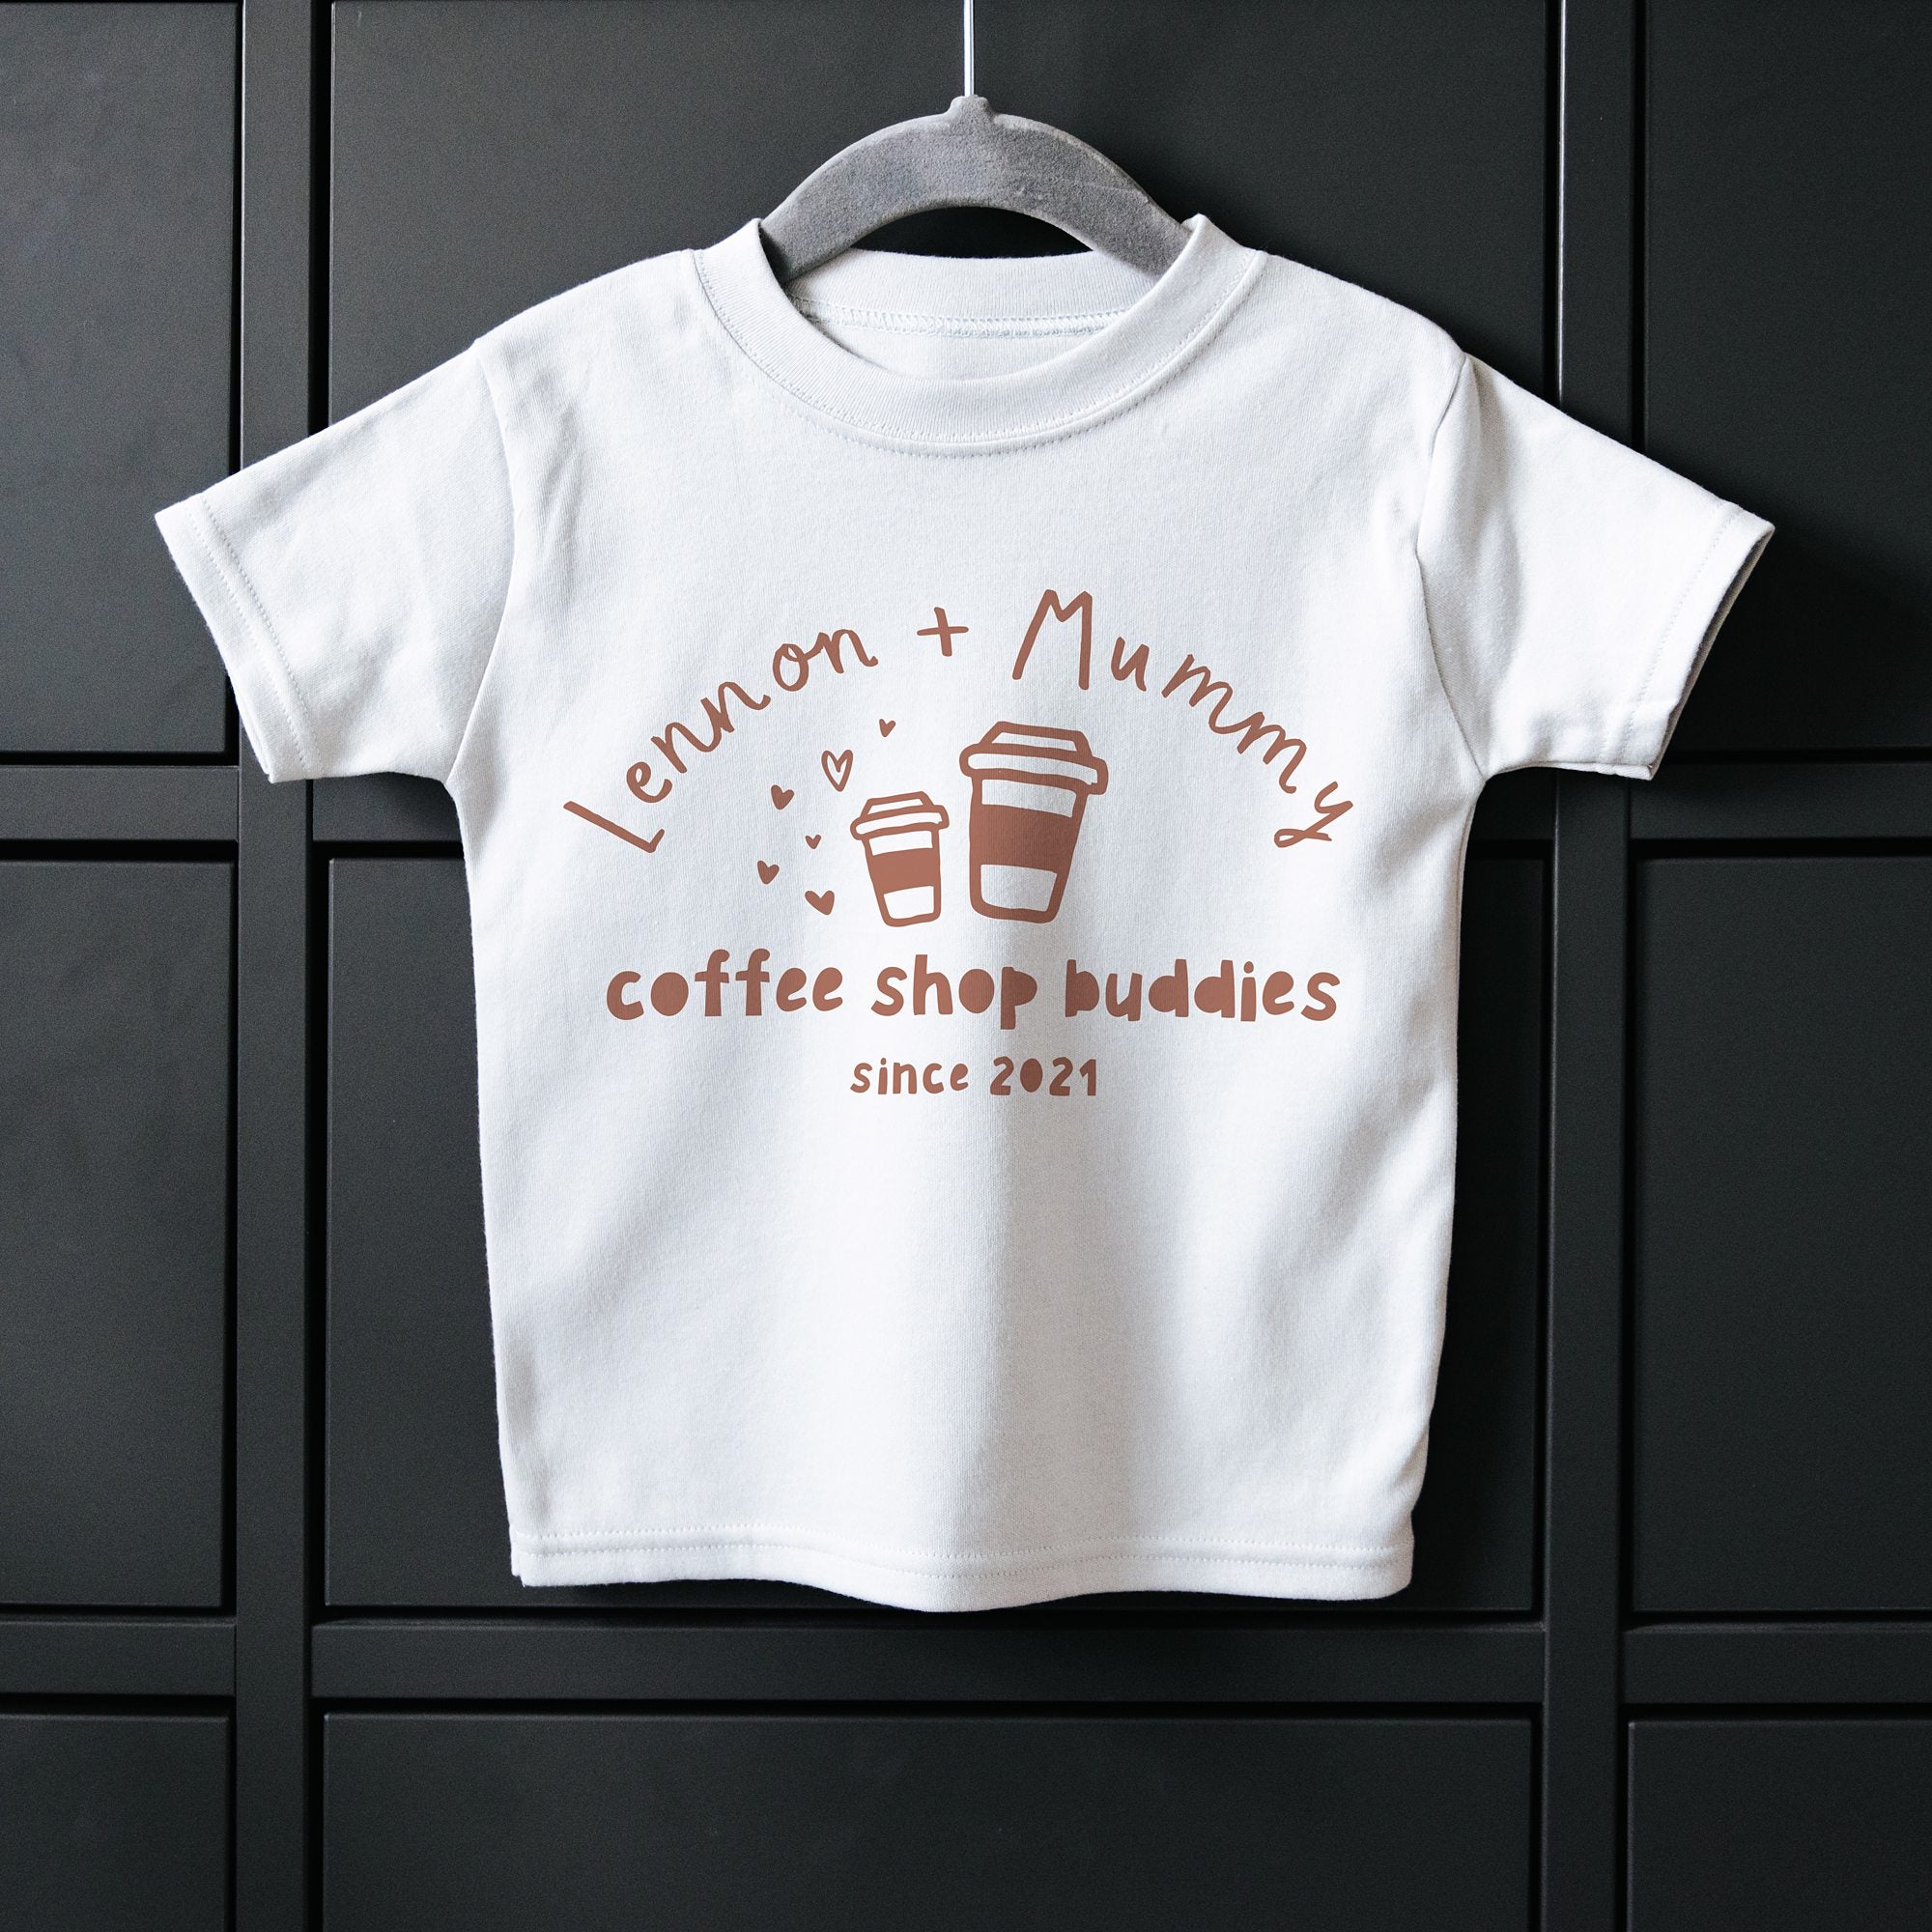 Coffee Buddies Children's T-Shirt - I am Nat Ltd - Children's T-Shirt